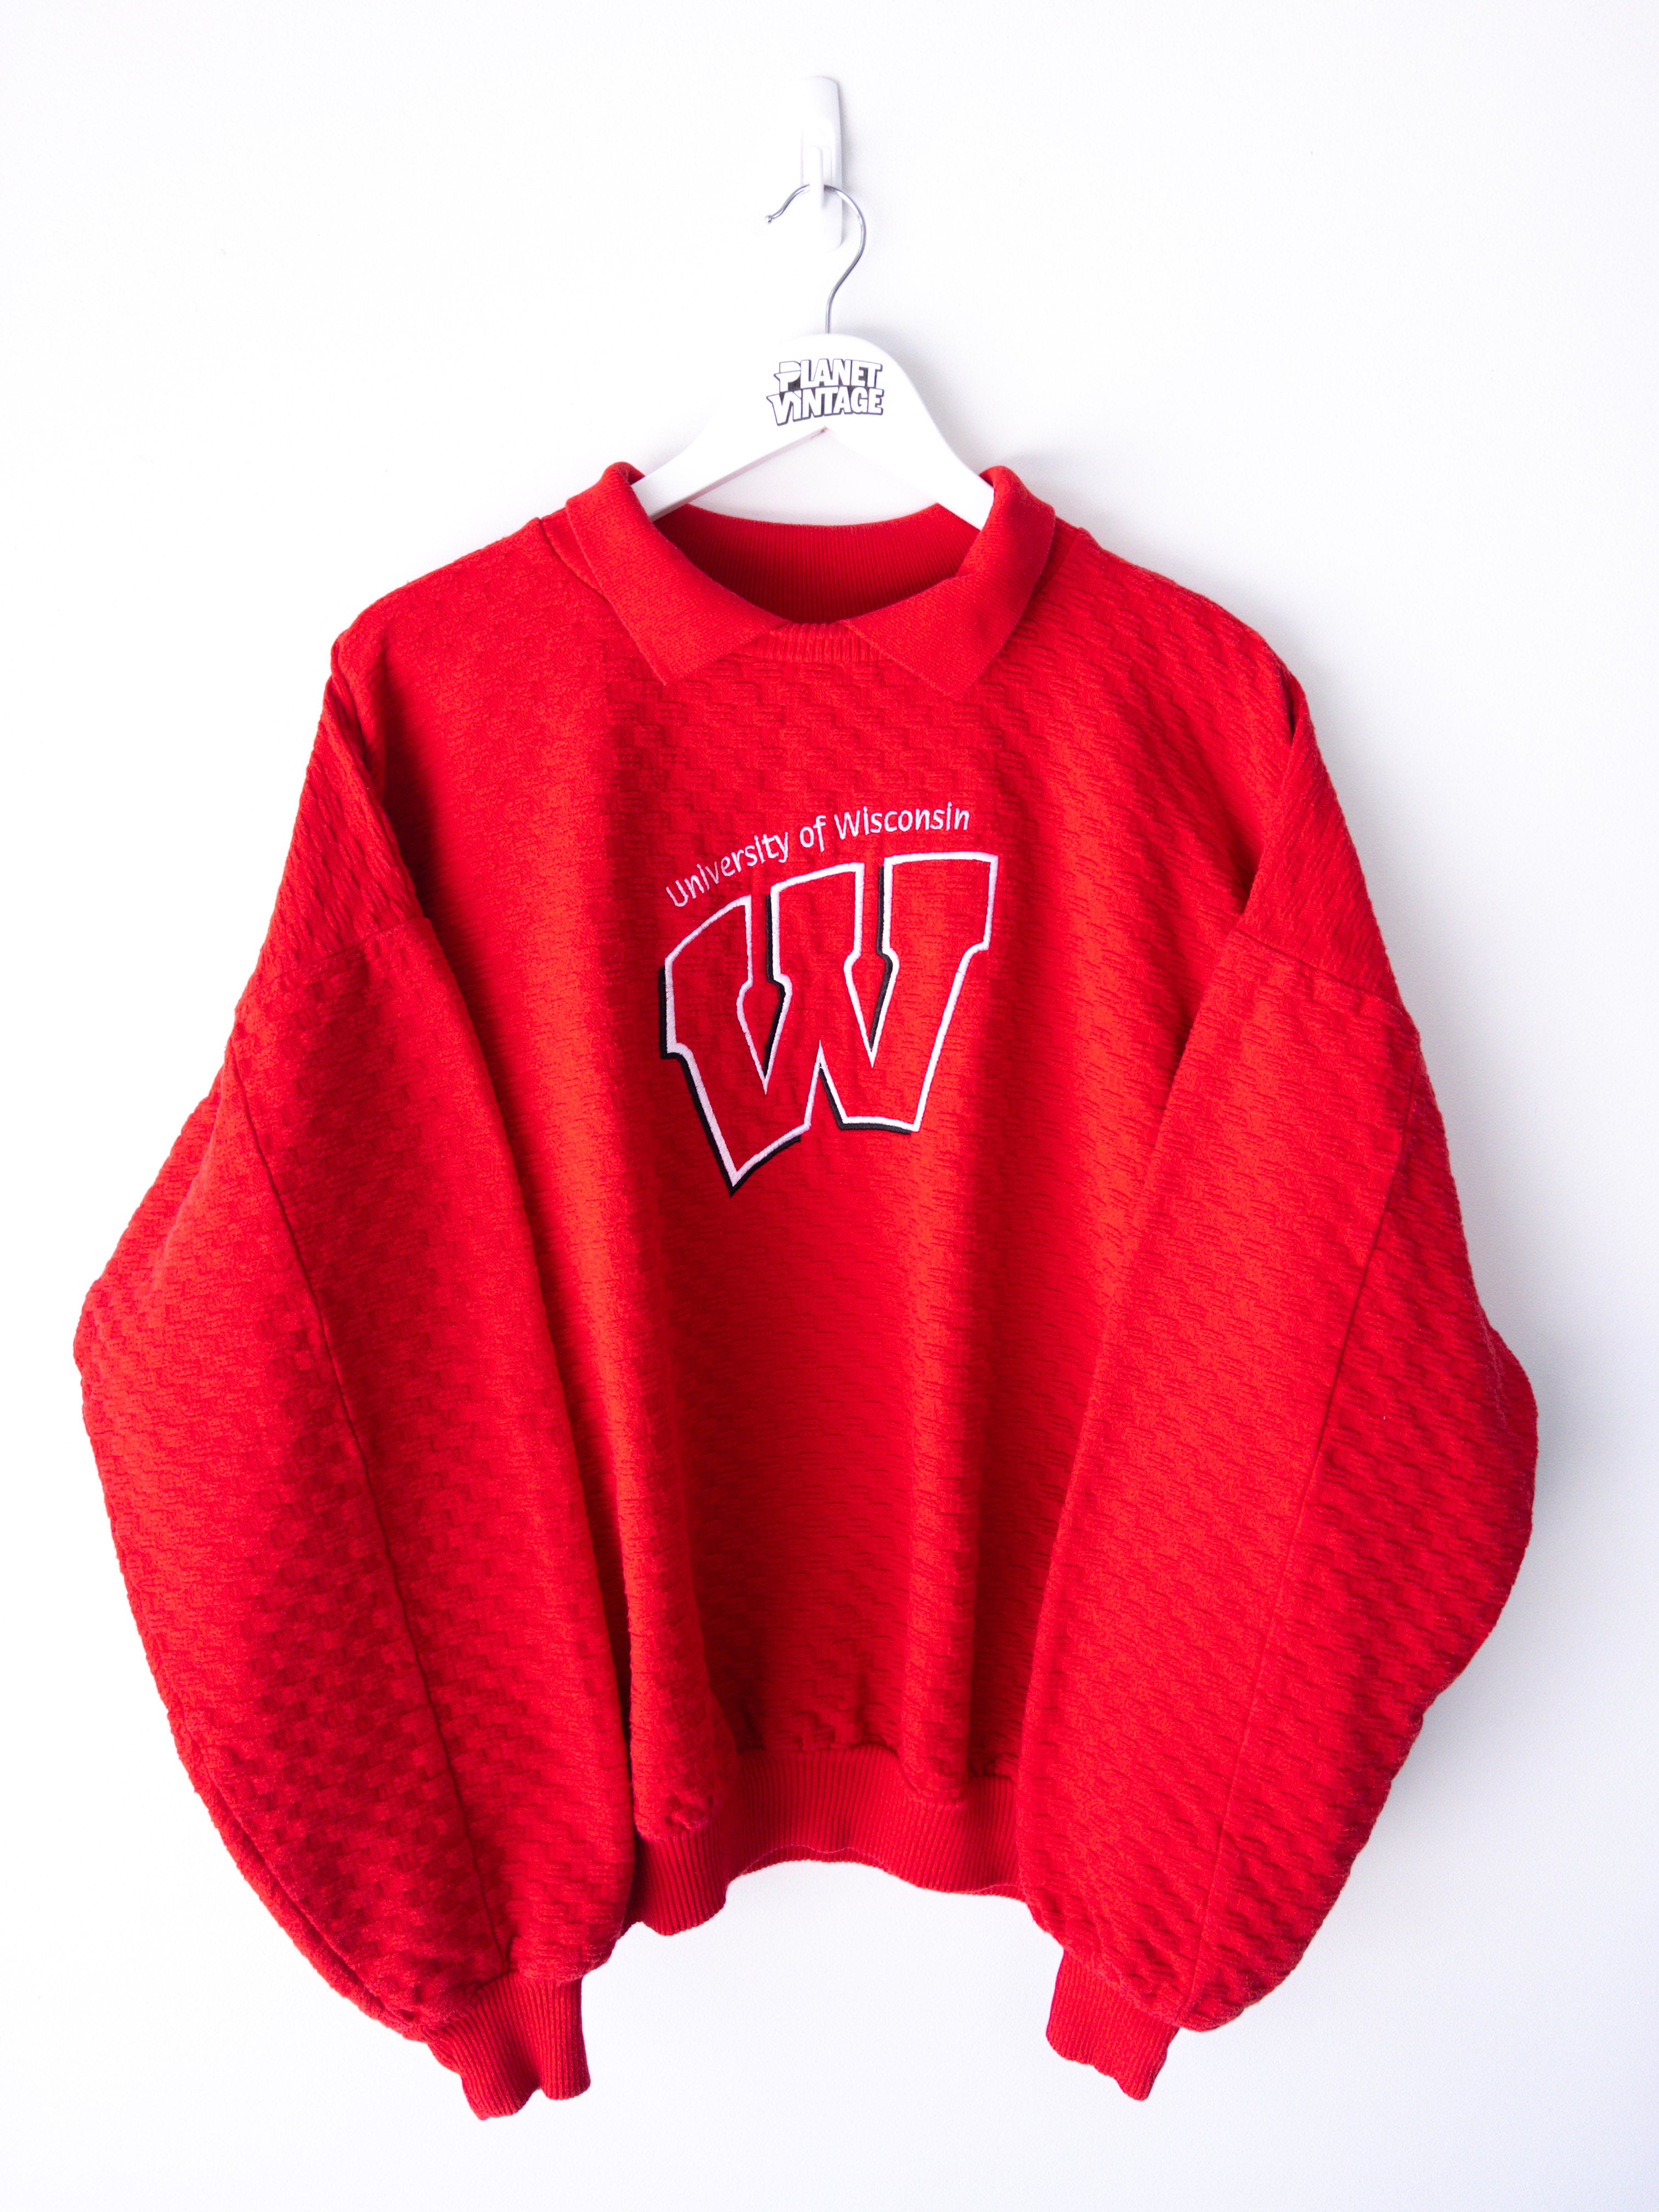 Vintage University of Wisconsin Sweatshirt (XL)